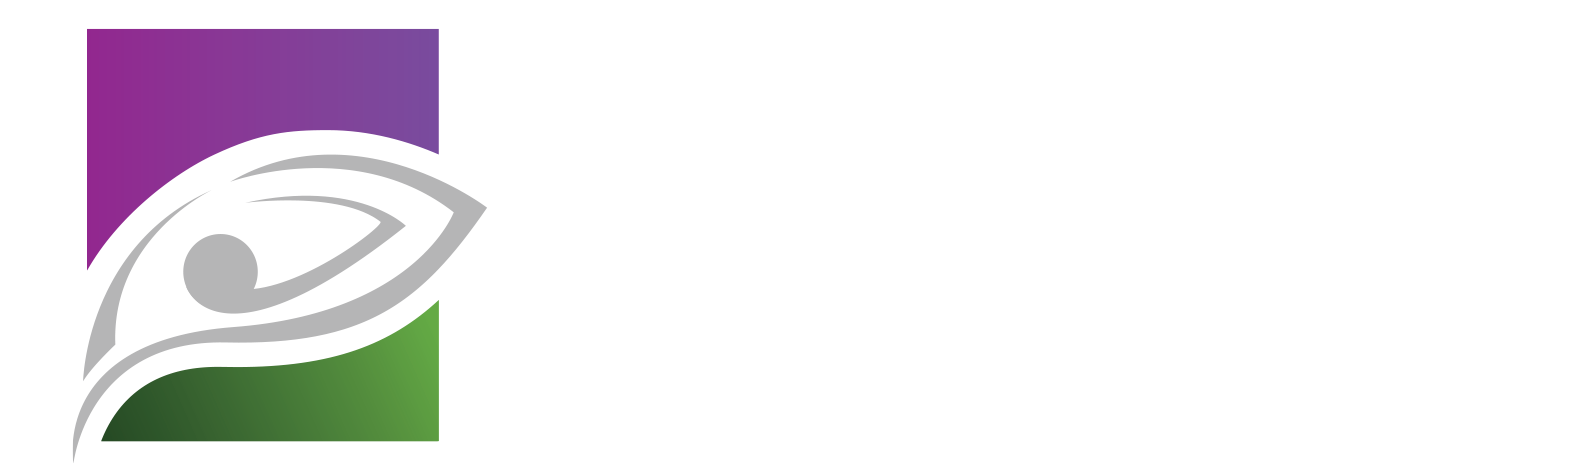 Desert Ophthalmology